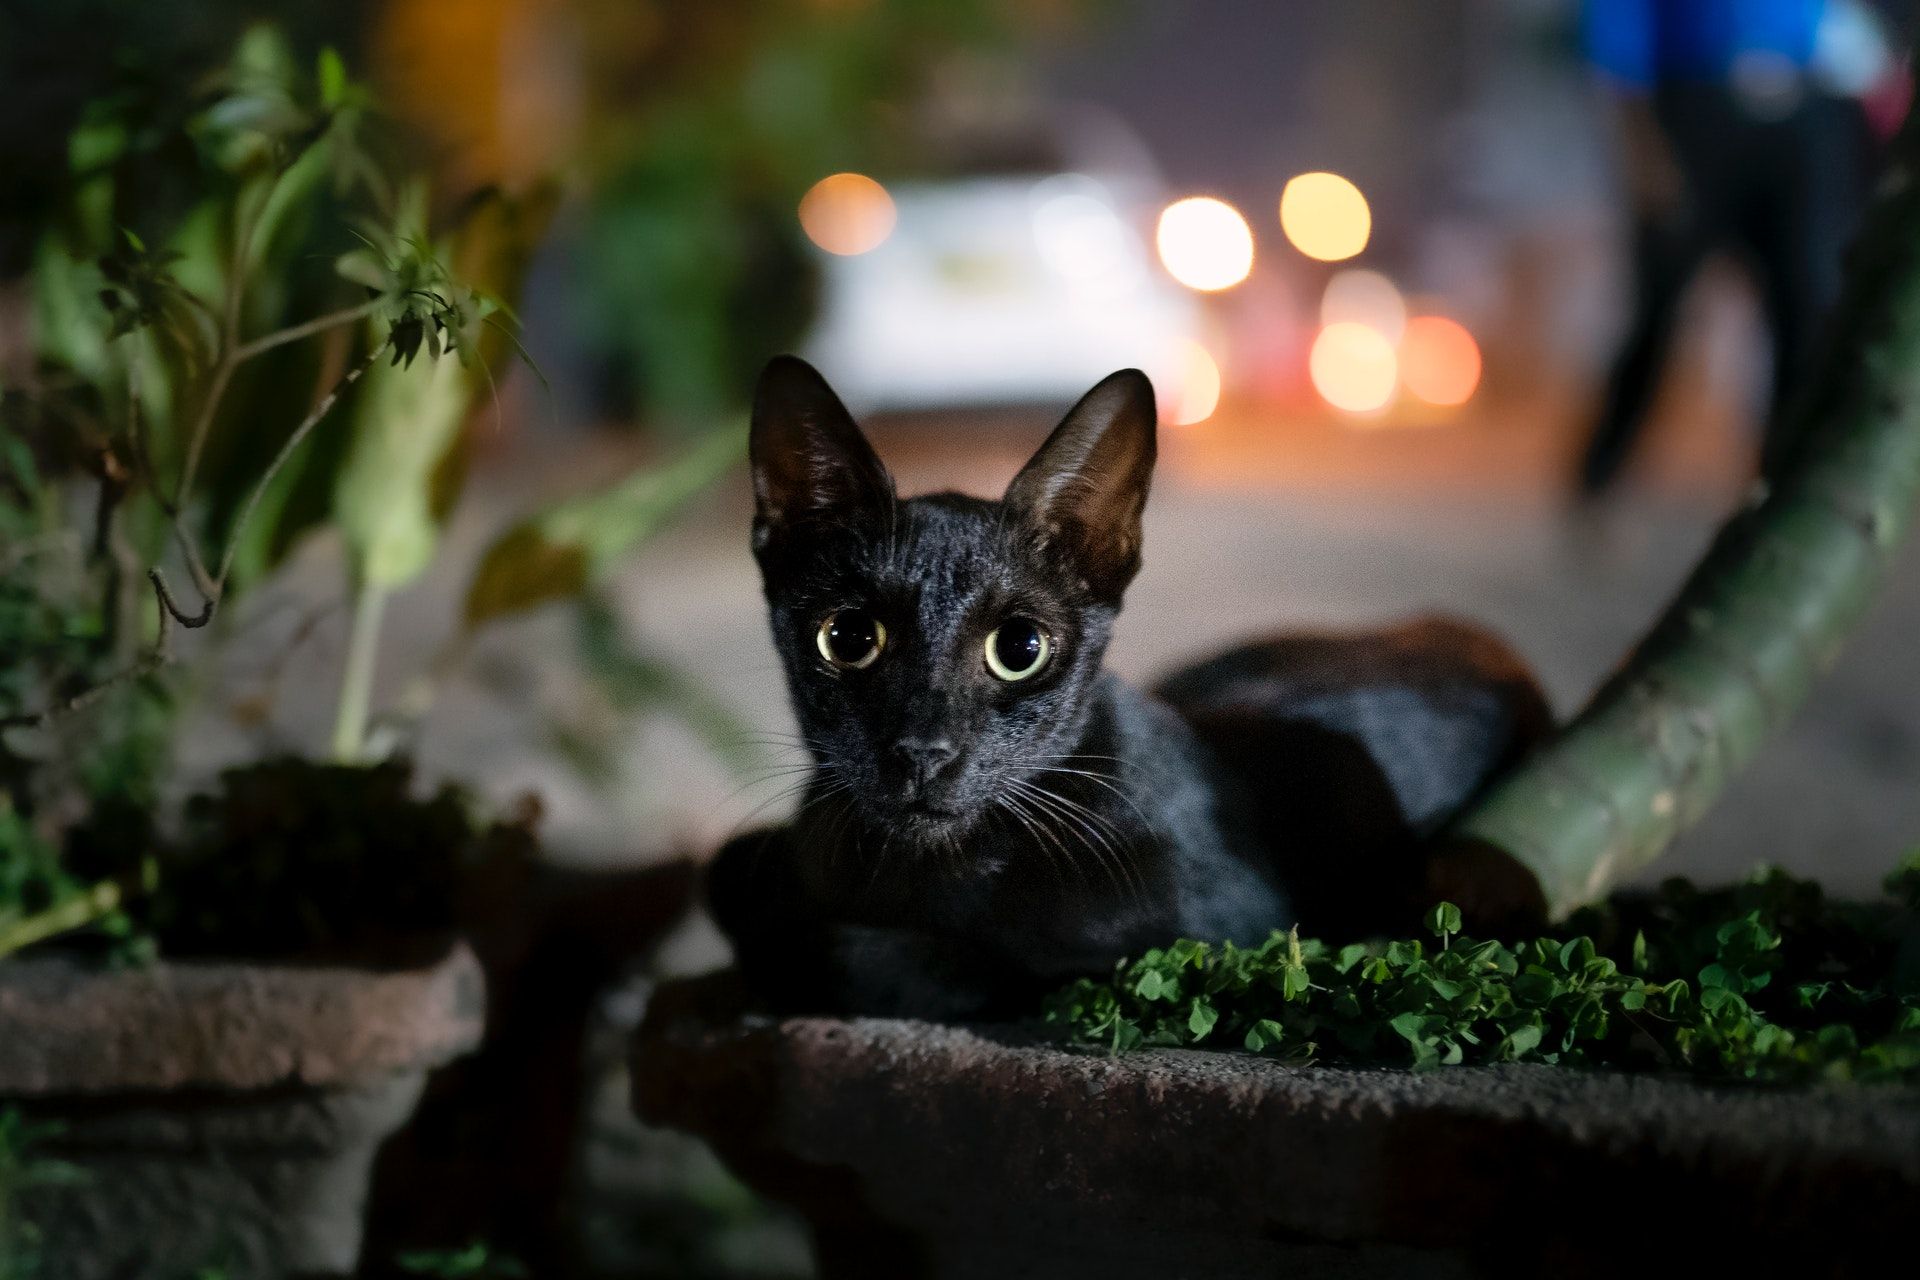 Black cat along a city street at night